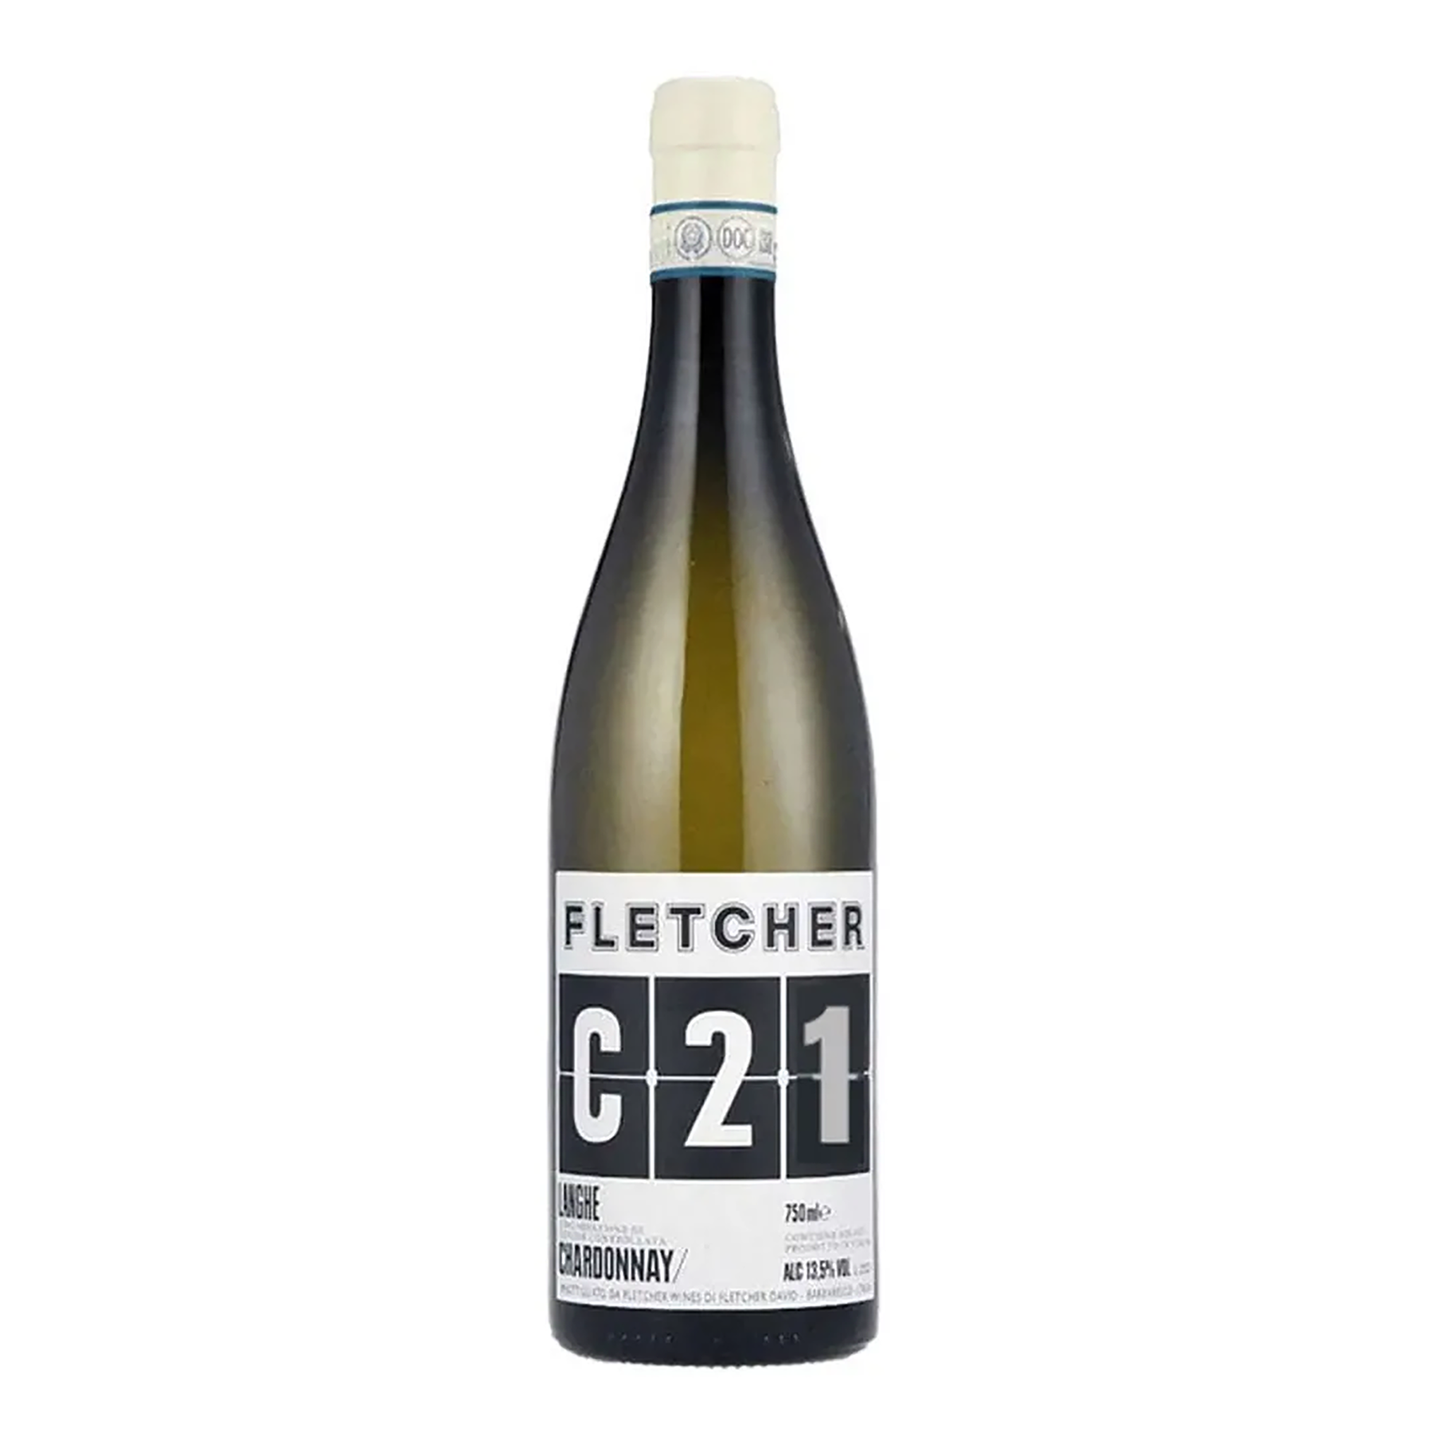 Fletcher C21 Langhe DOC Chardonnay 2021